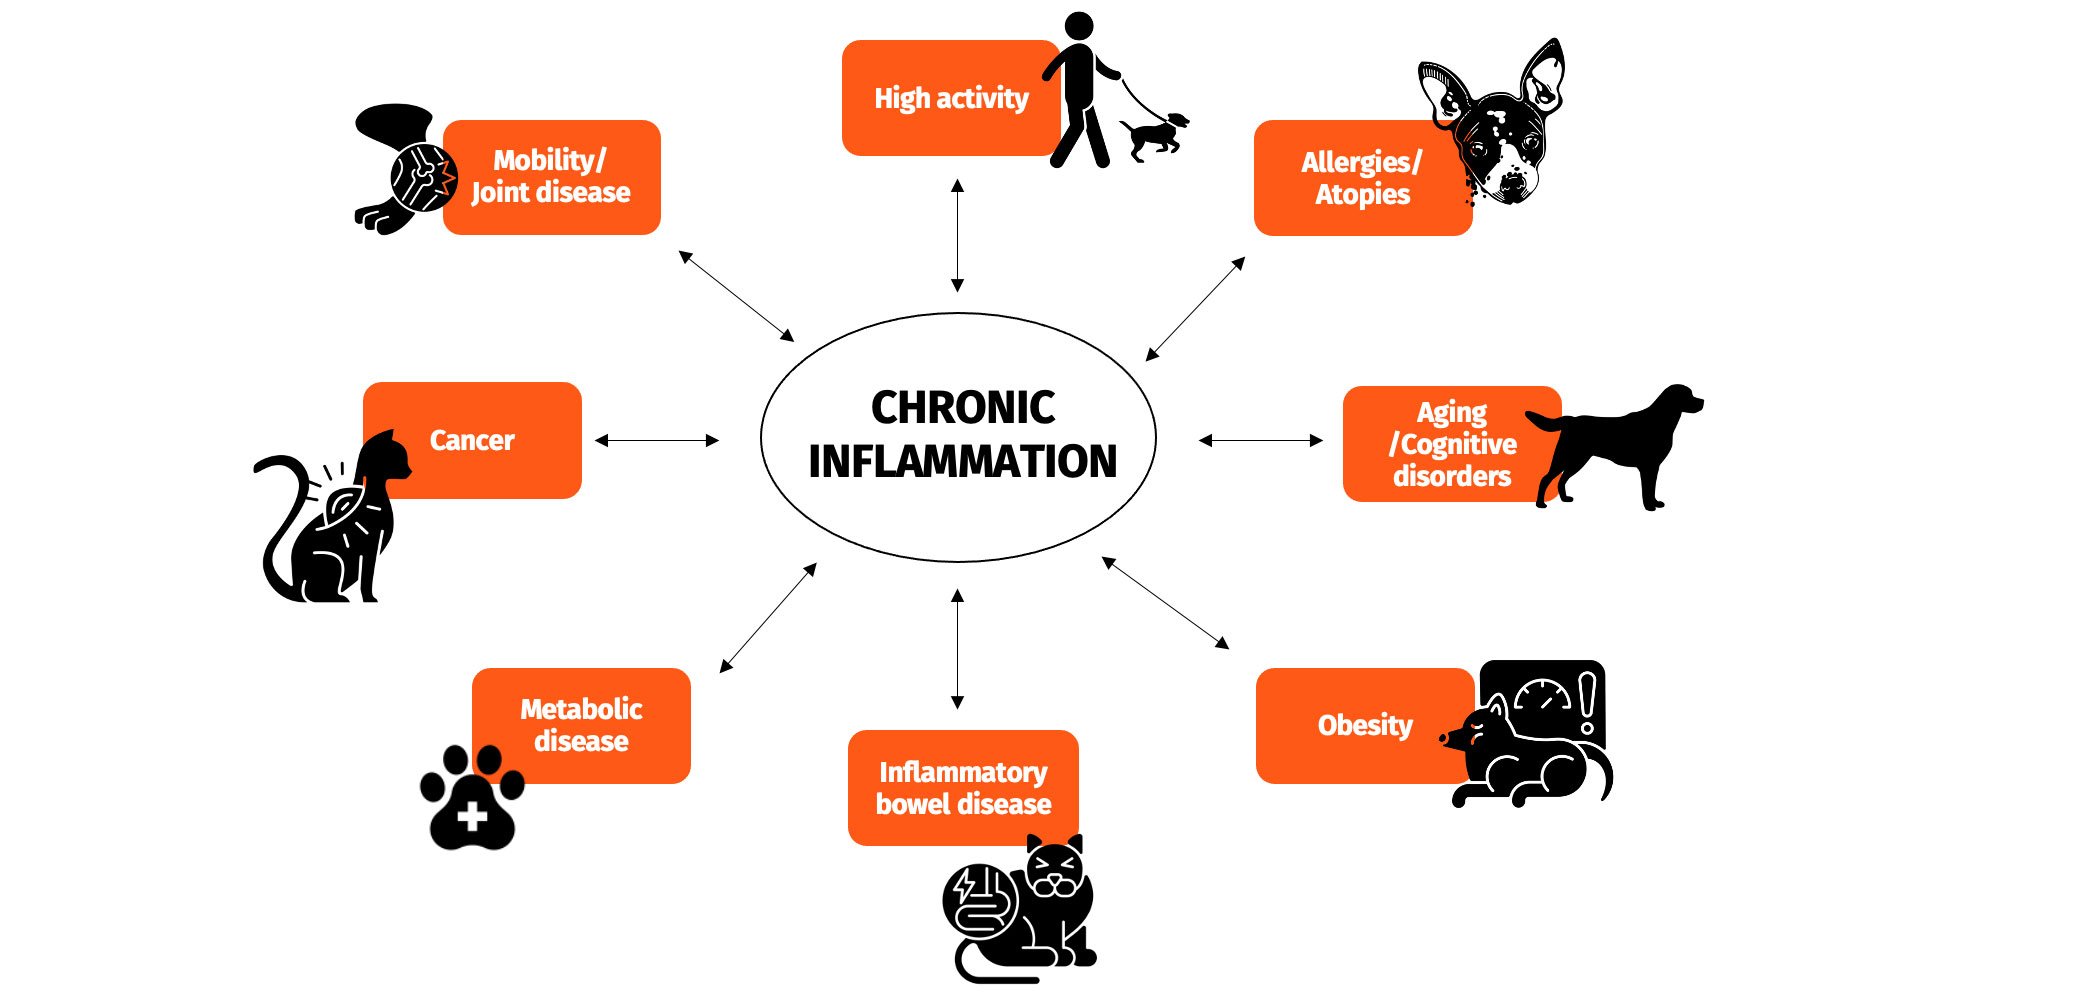 Chronic inflammatory conditions